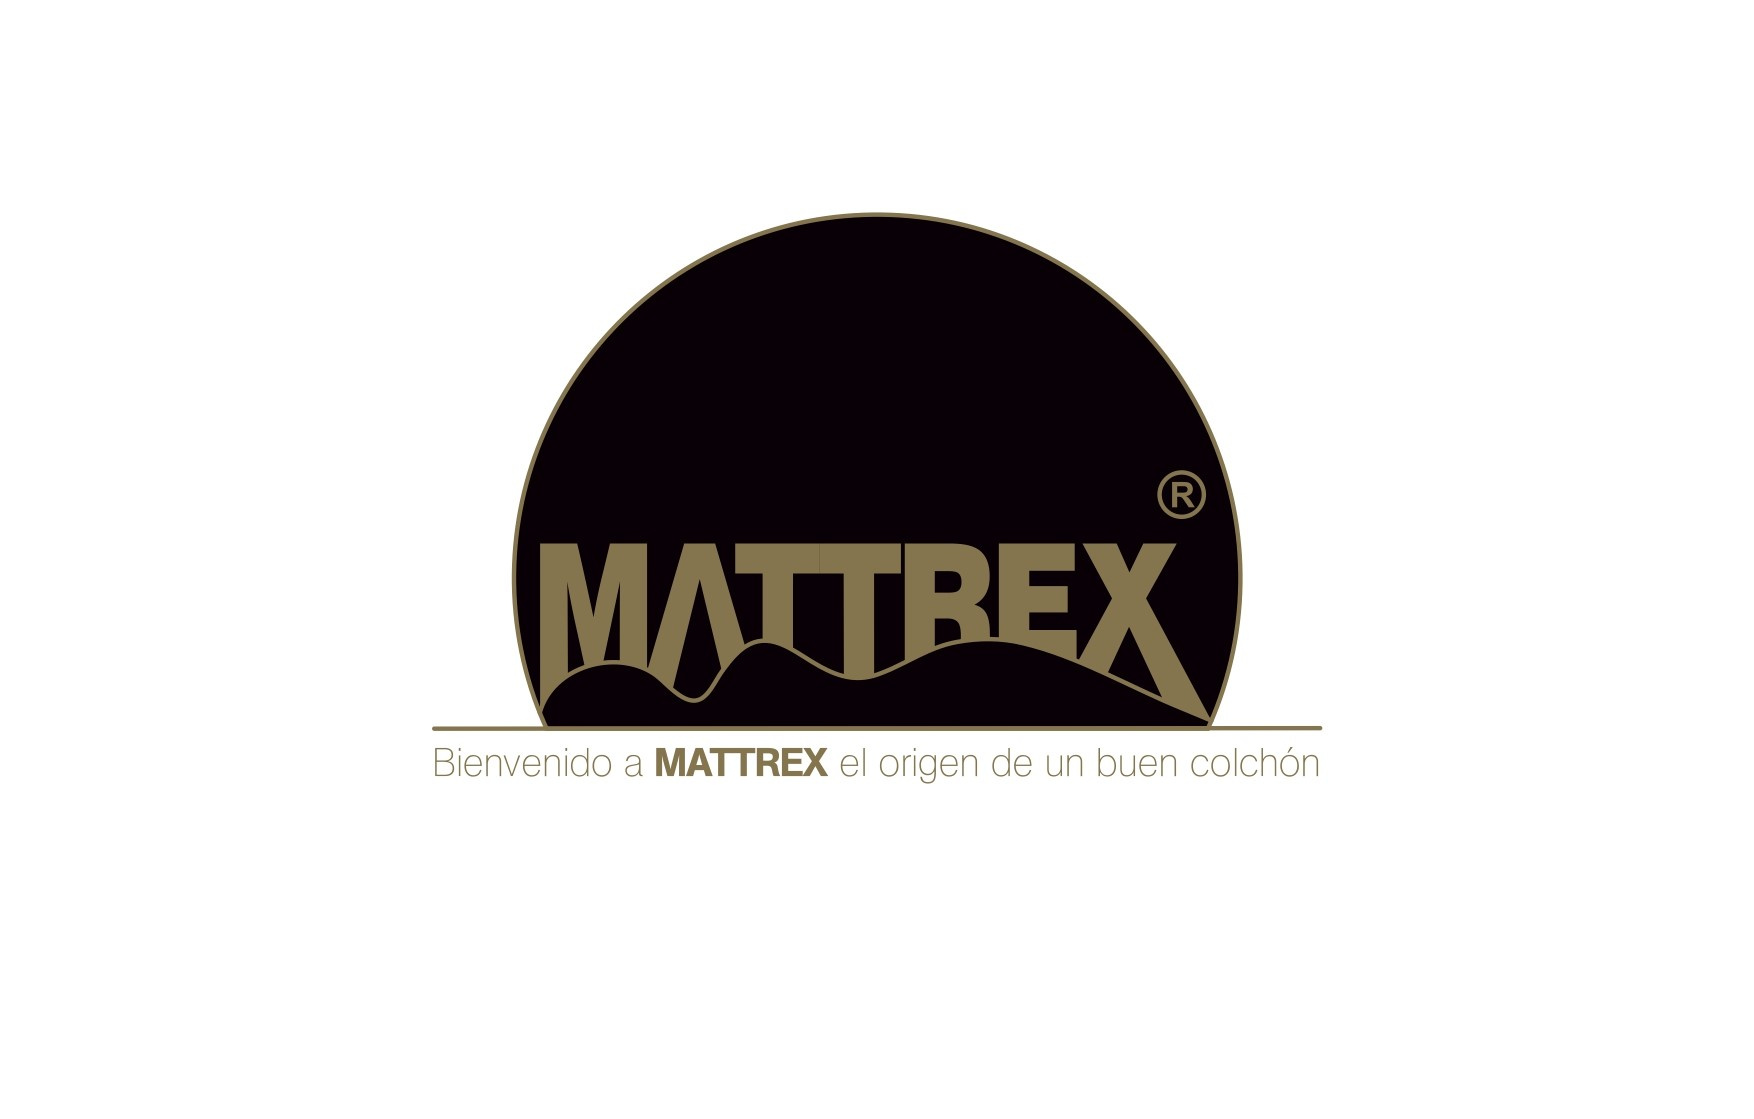 Mattrex